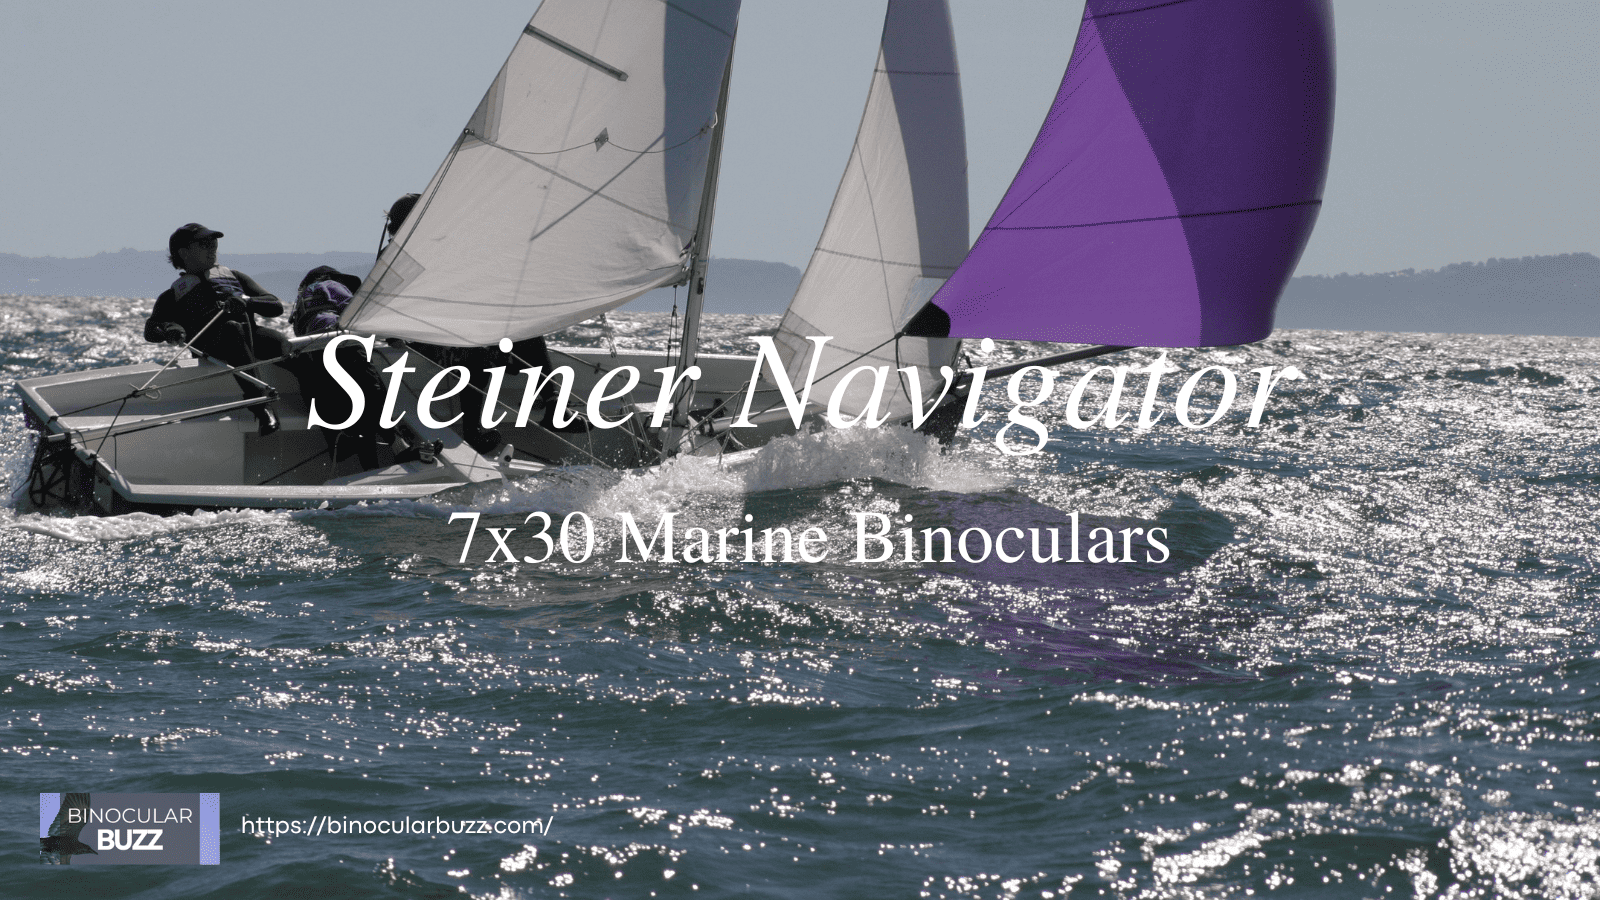 Steiner Navigator 7x30 Marine Binoculars